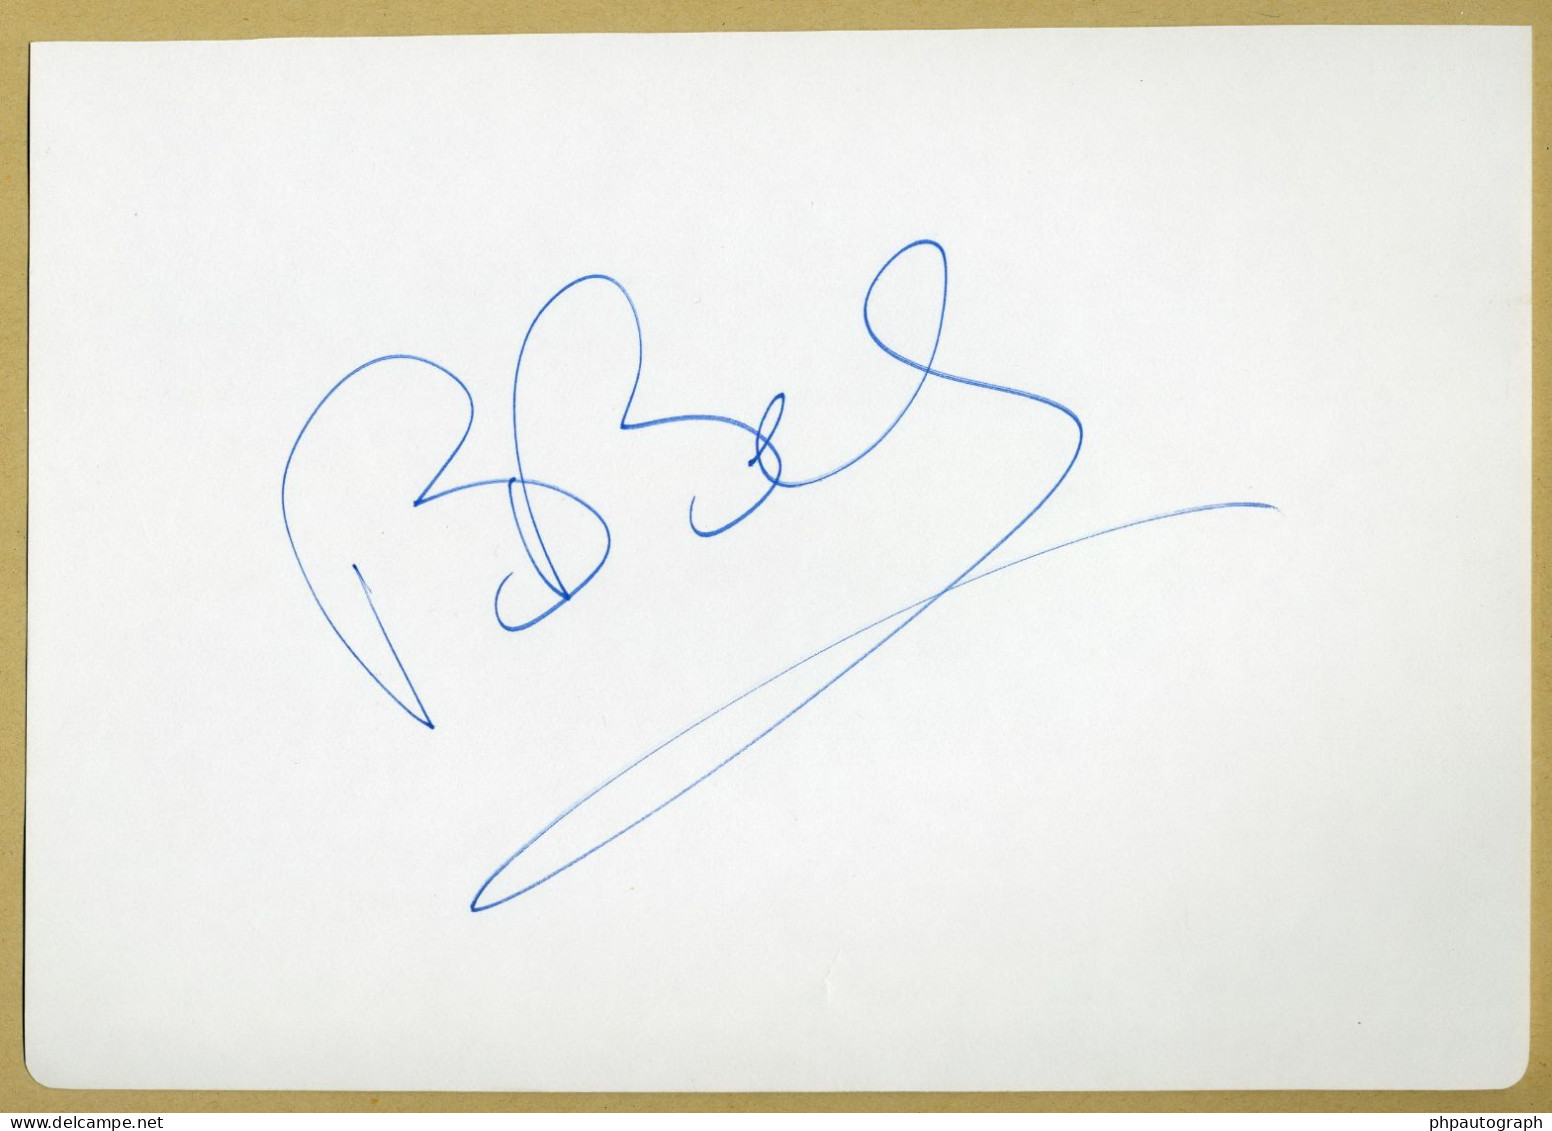 Boris Becker - German Tennis Player - Early Signed Album Page - Paris 1986 - COA - Deportivo